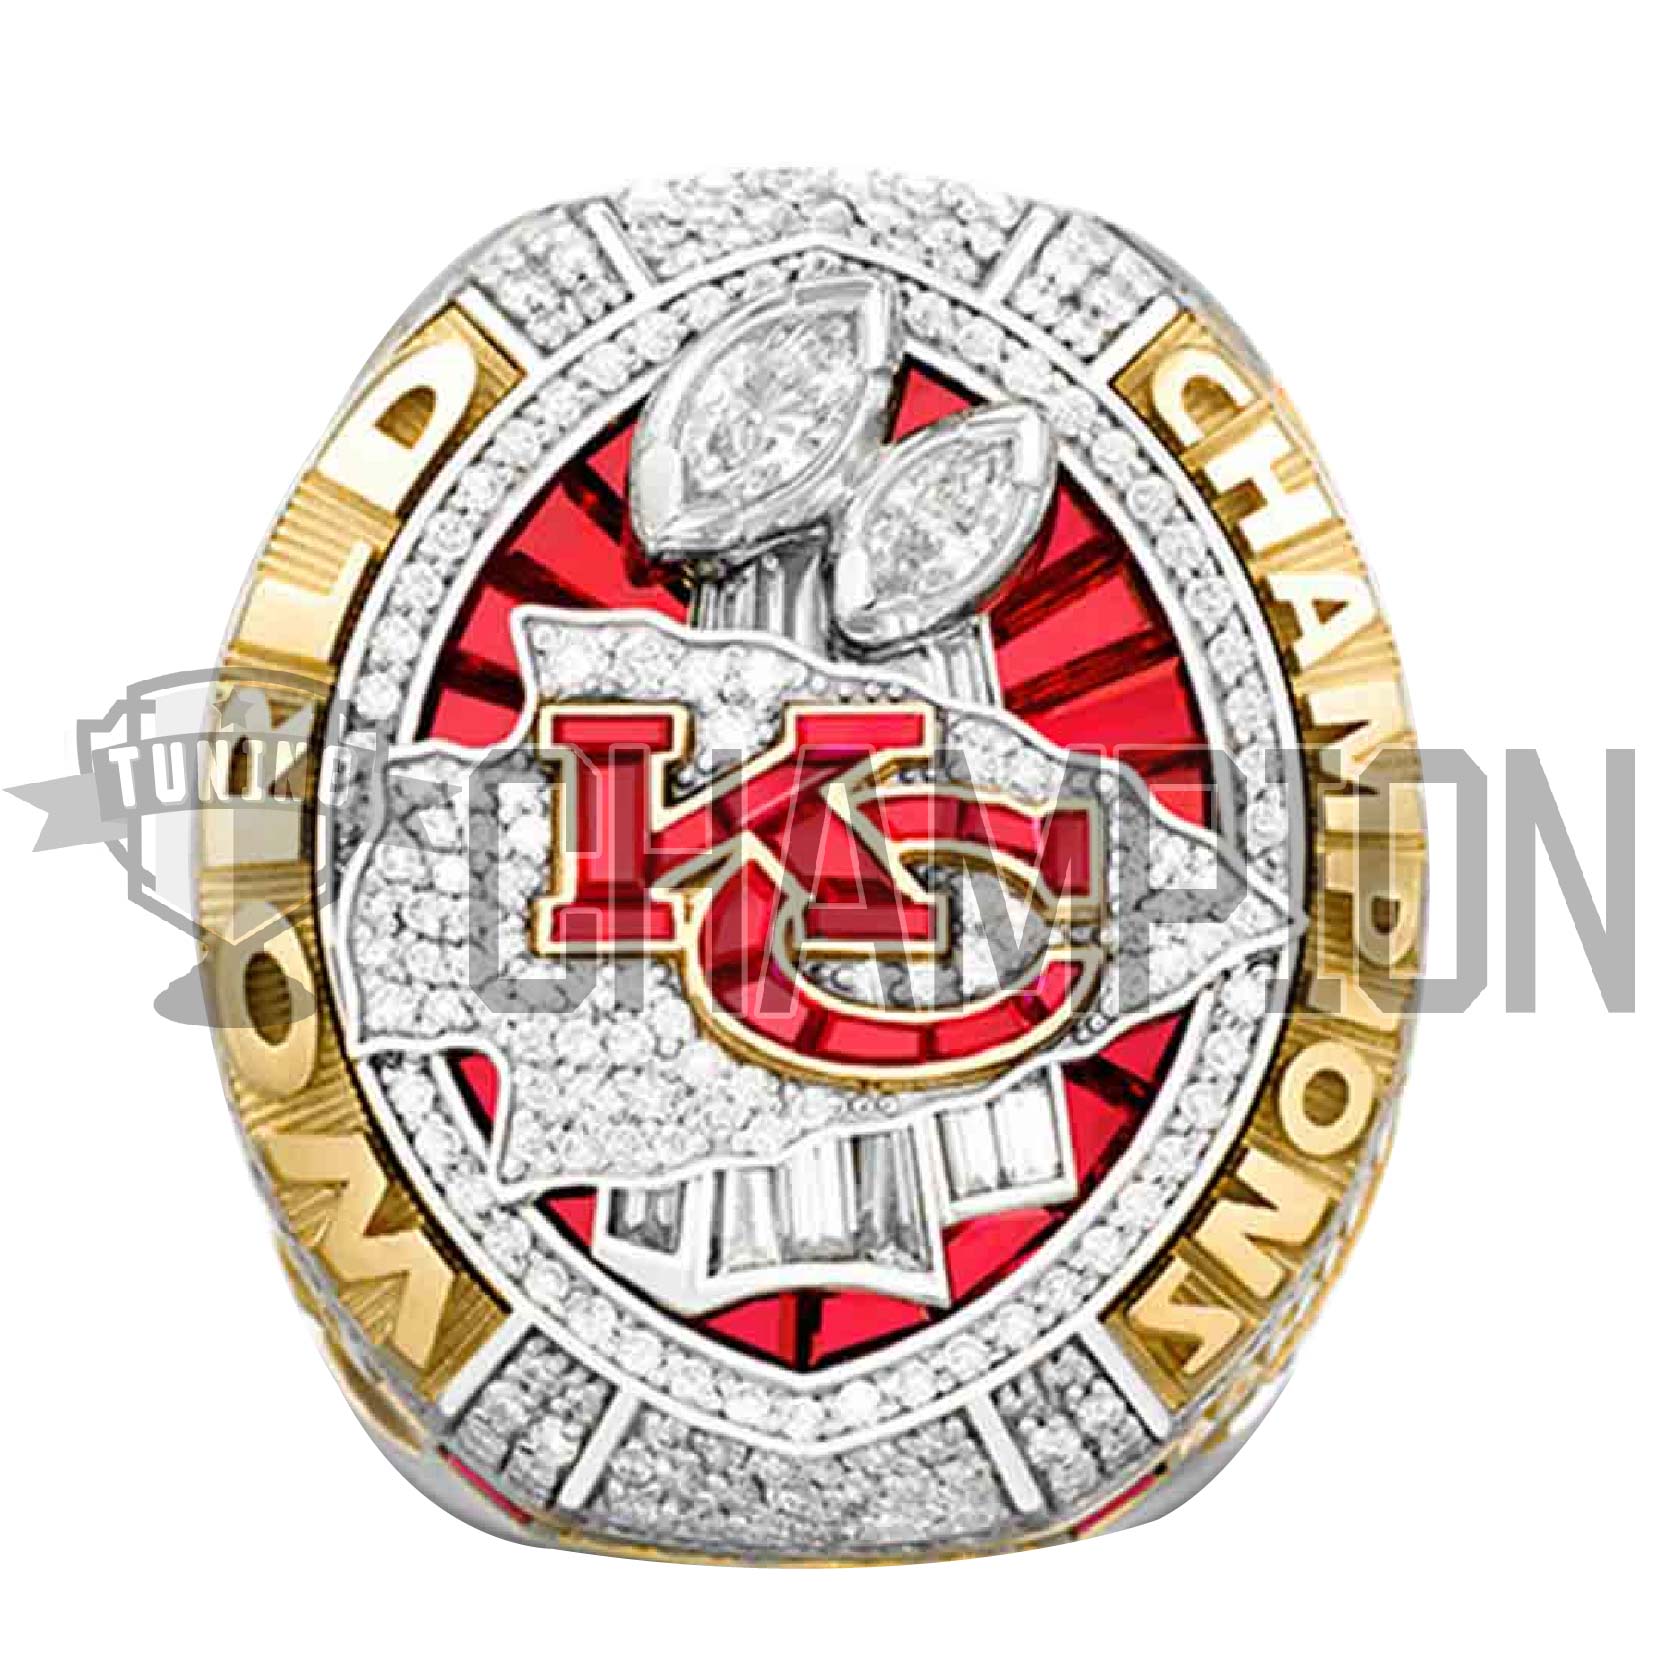 2019 Kansas City Chiefs Championship Ring Event victory ring